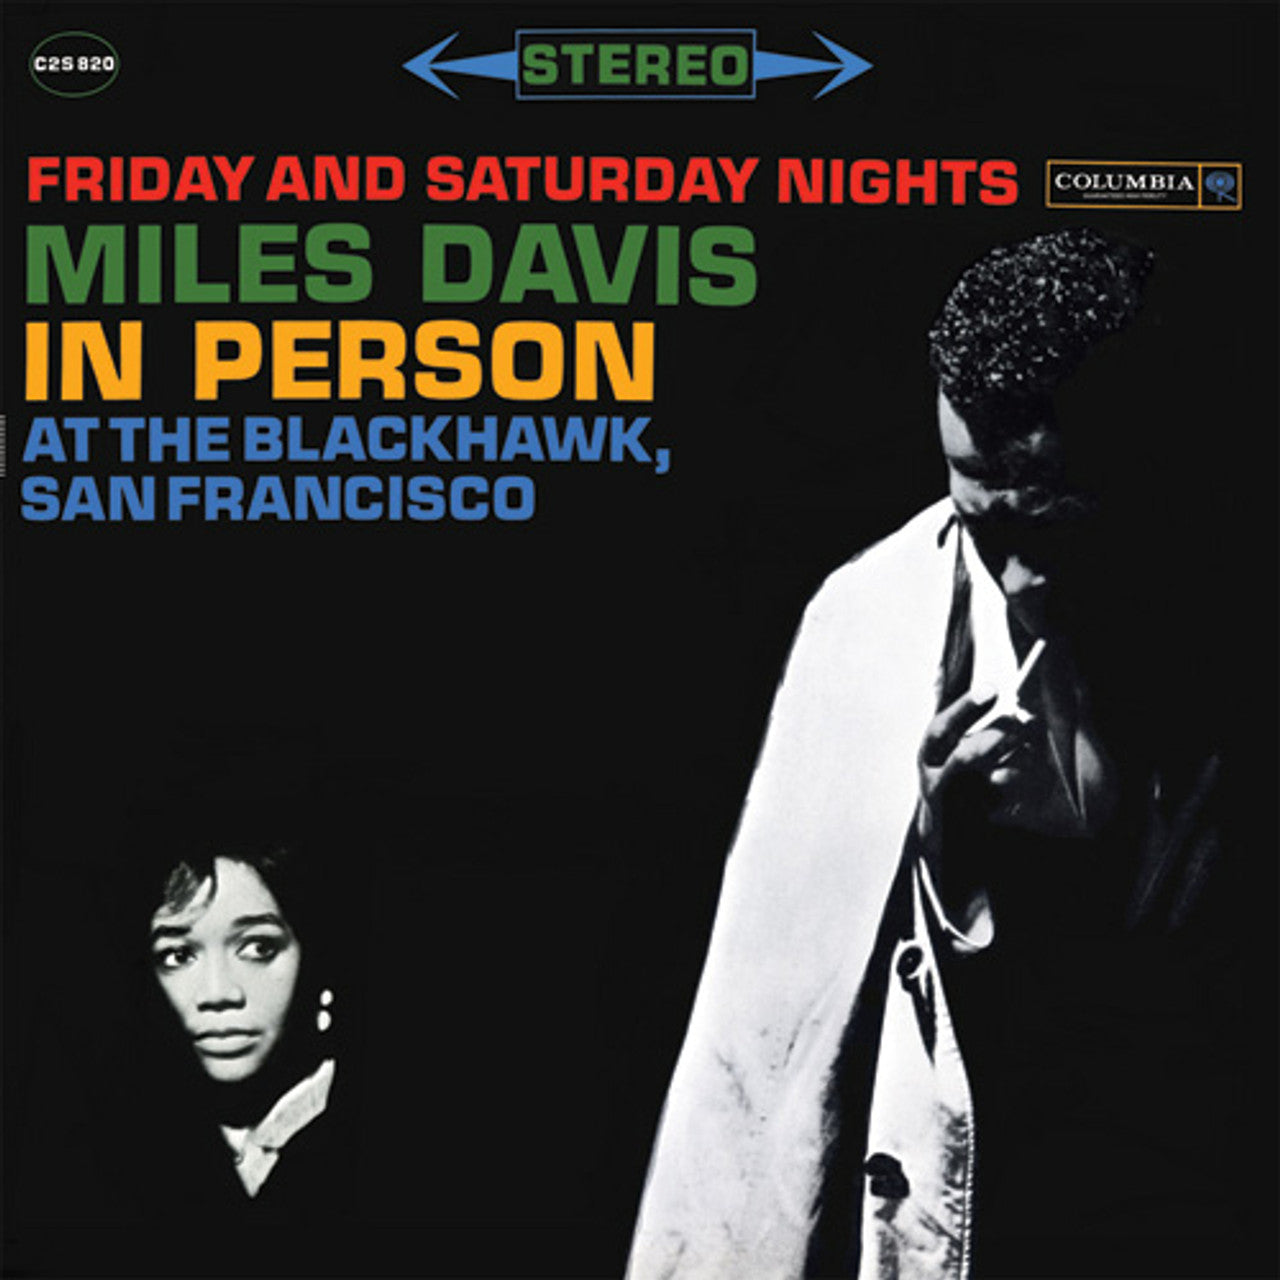 Miles Davis - In Person At The Blackhawk, San Francisco Friday And Saturday Nights